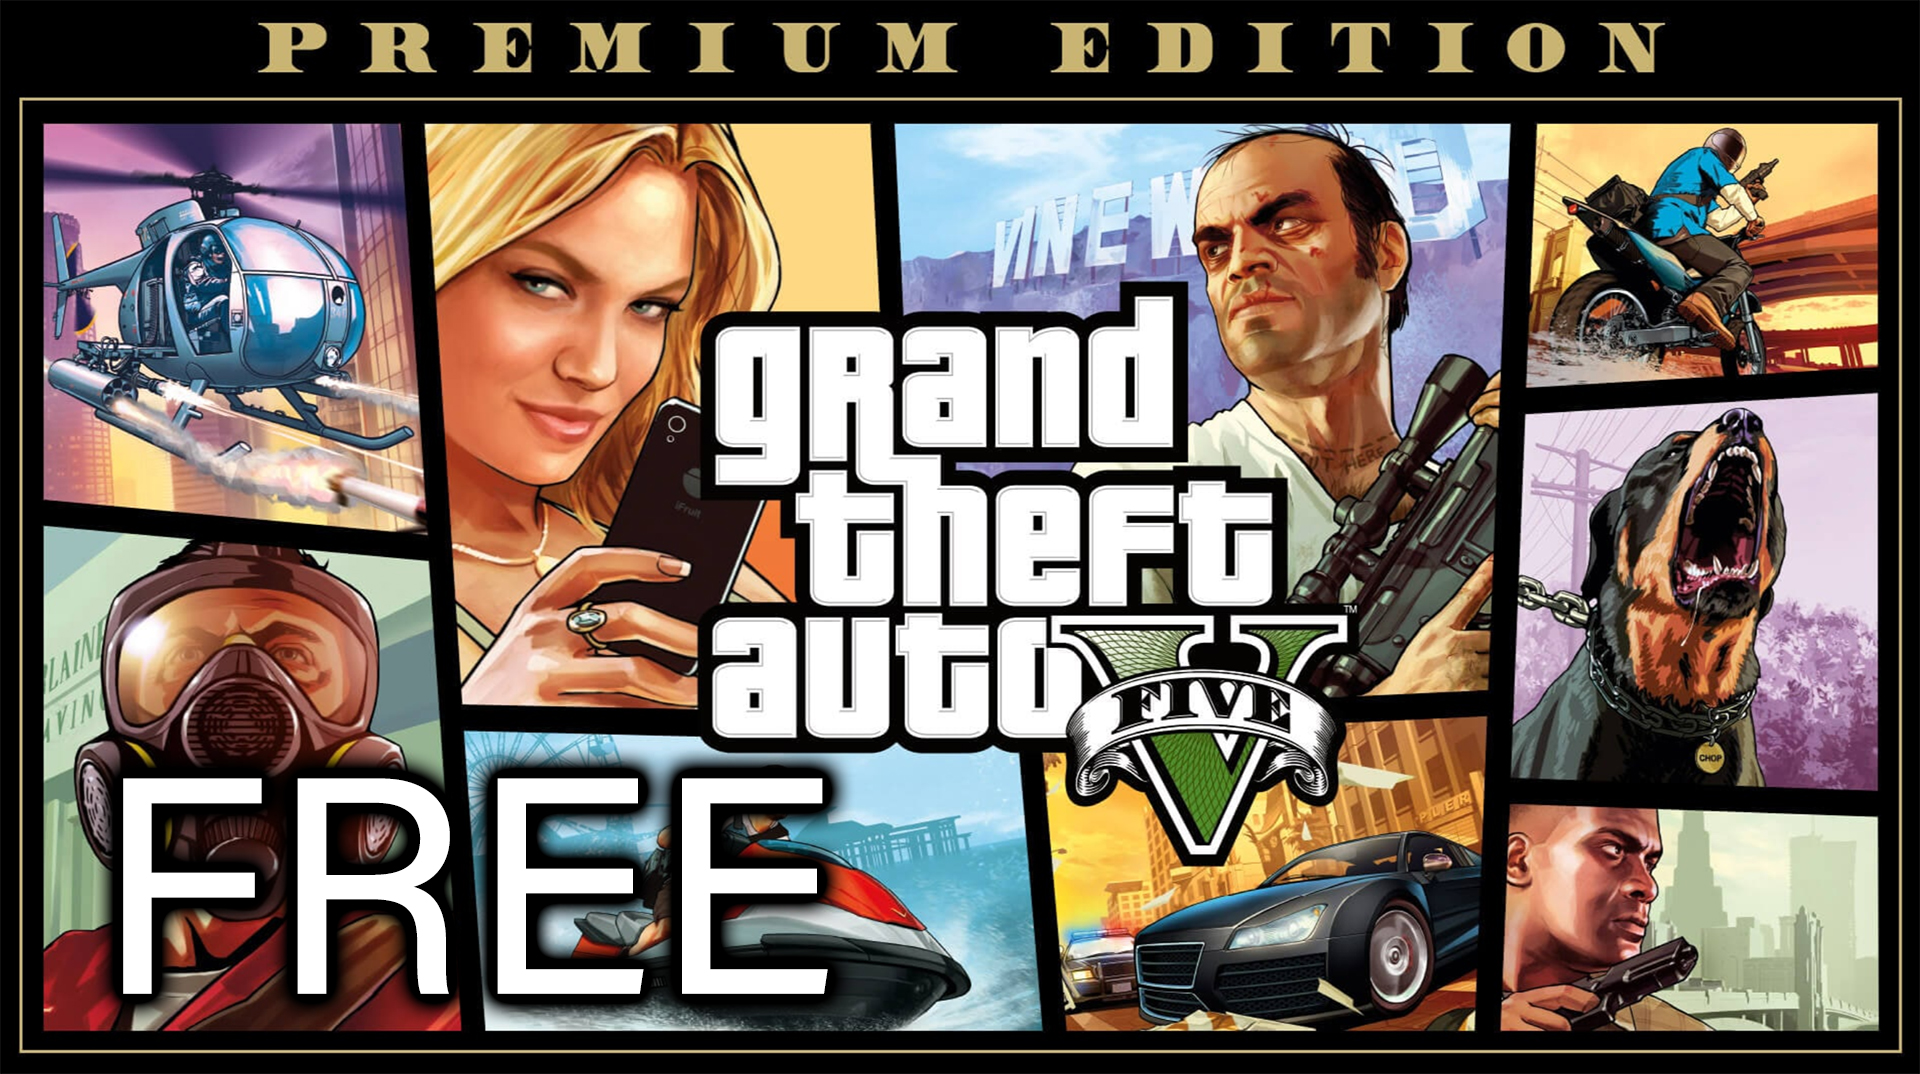 Grand Theft Auto V Premium Edition for FREE